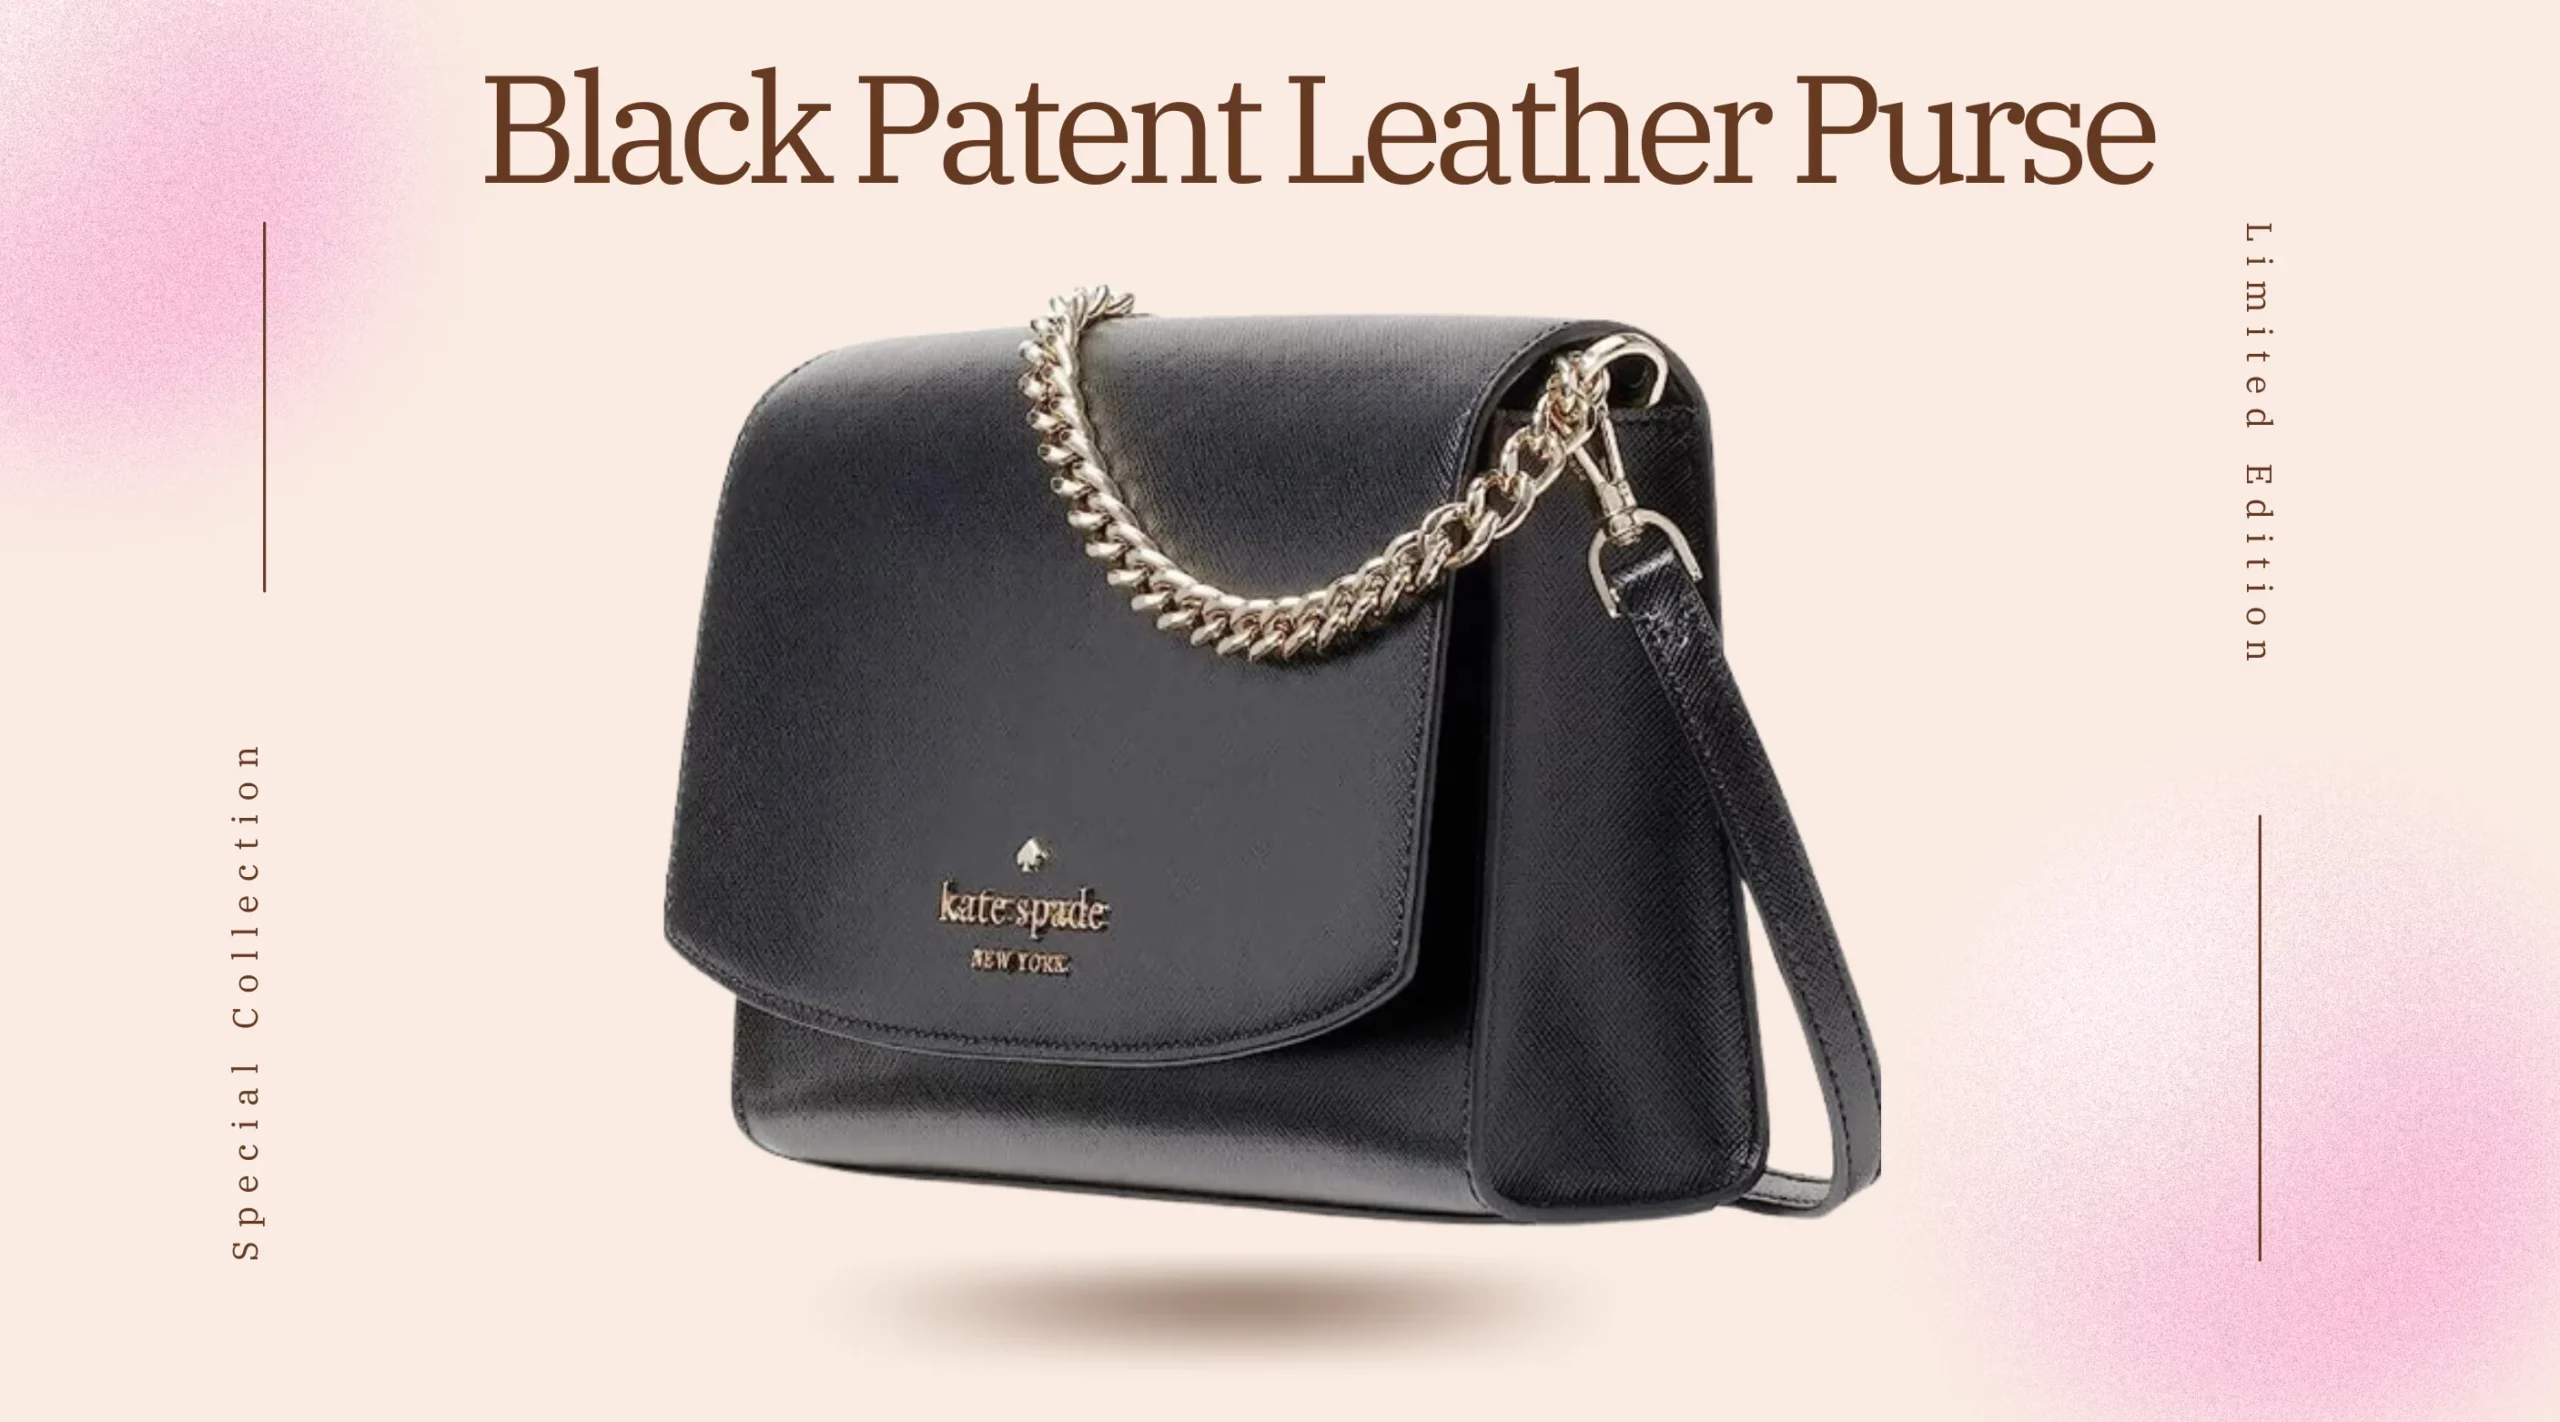 Black Patent Leather Purse